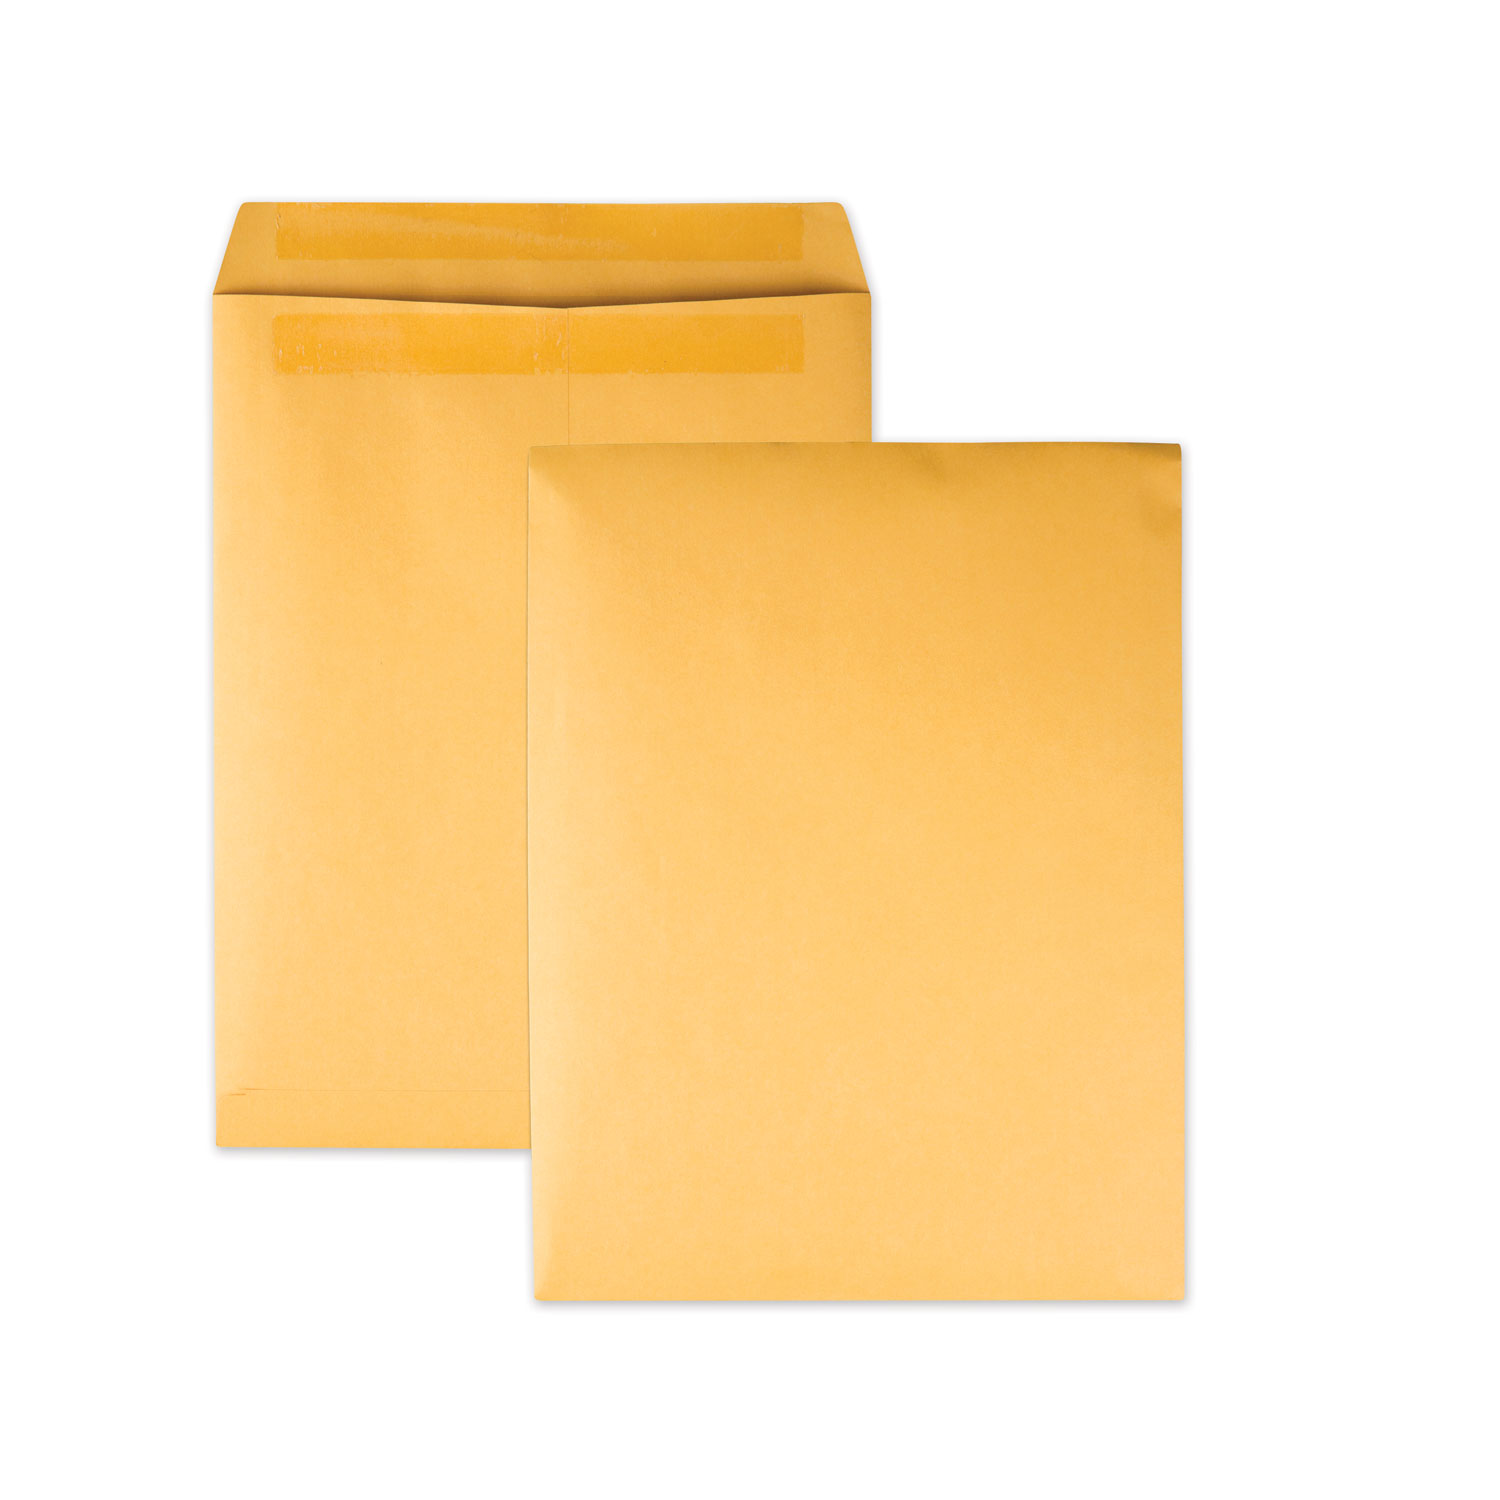 Redi-Seal Catalog Envelope, #13 1/2, Cheese Blade Flap, Redi-Seal Closure, 10 x 13, Brown Kraft, 250/Box